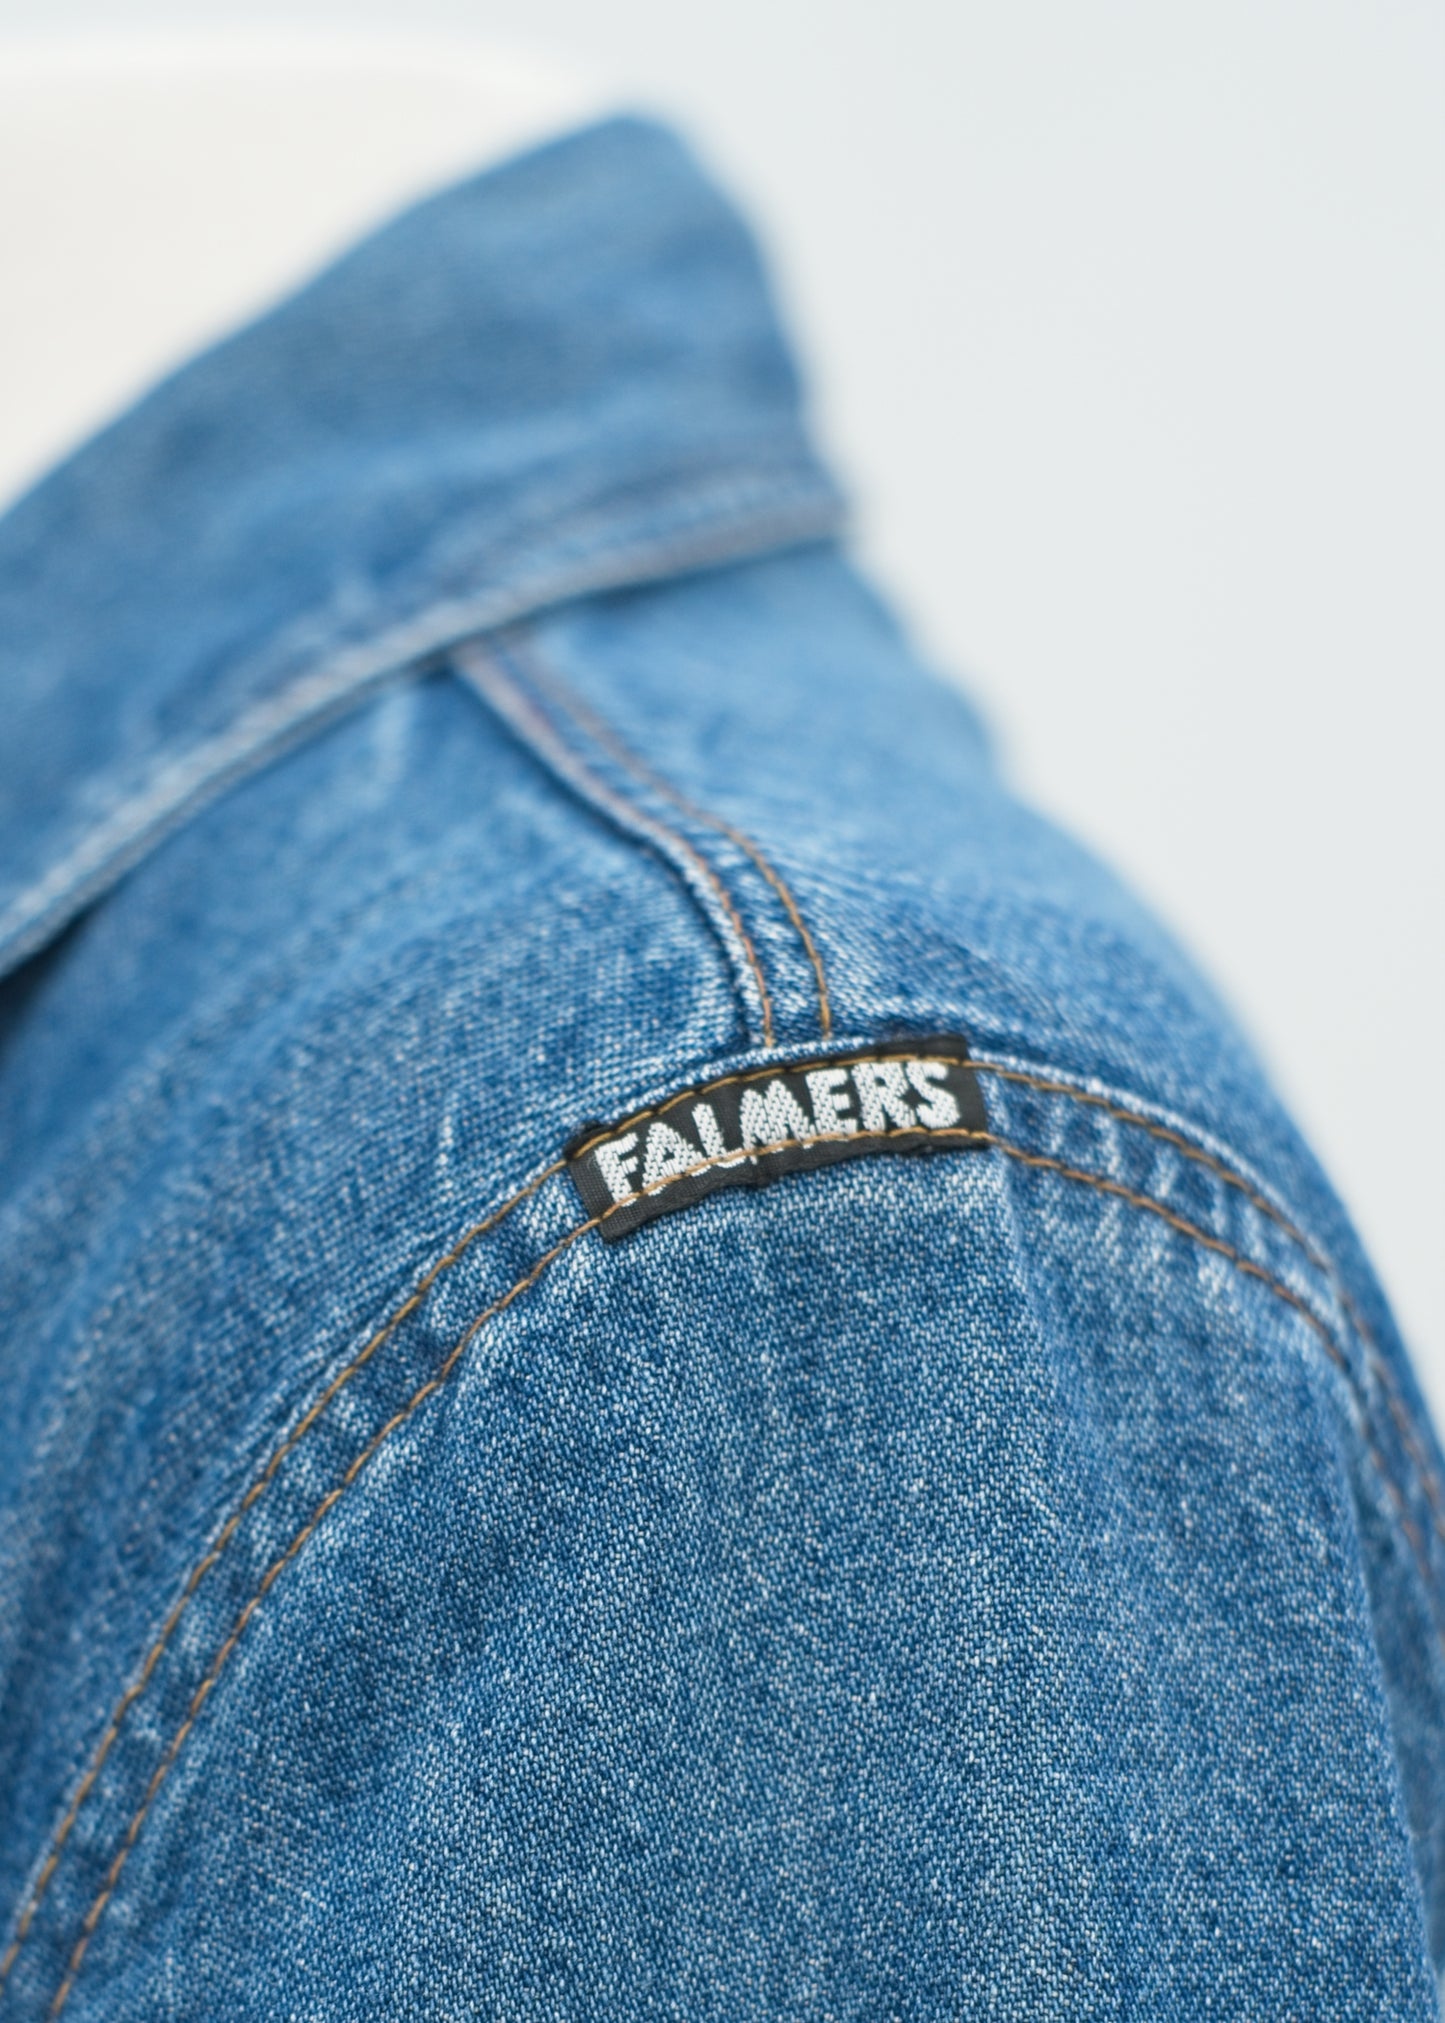 Vintage 70s Falmers Denim Short Sleeve Shirt Jacket